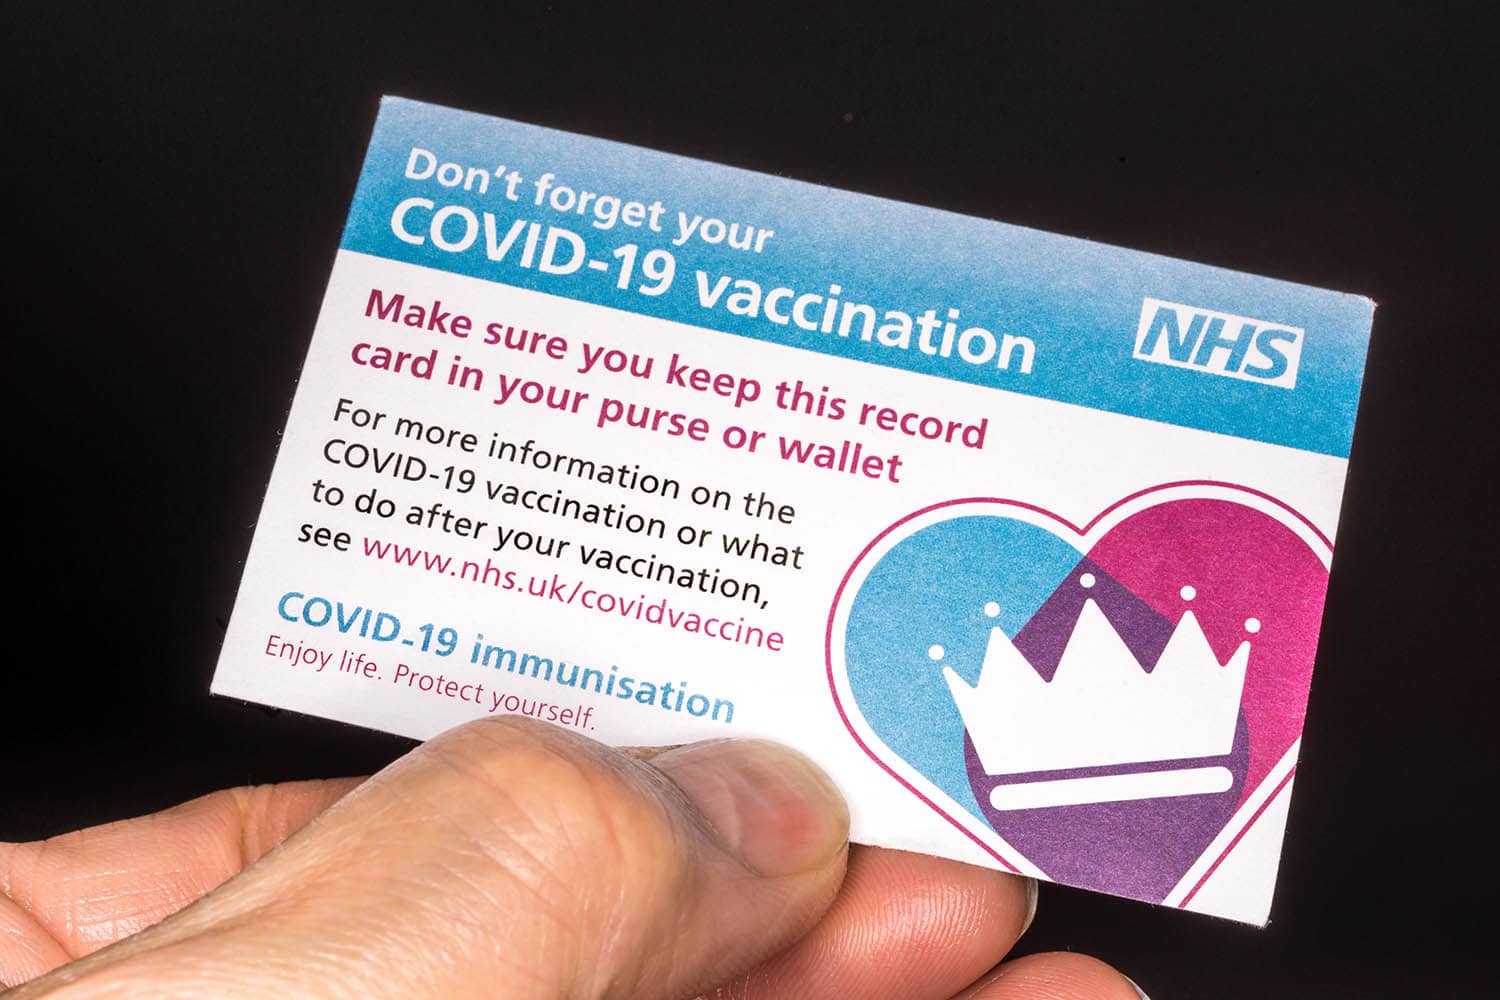 Covid 19 vaccinations